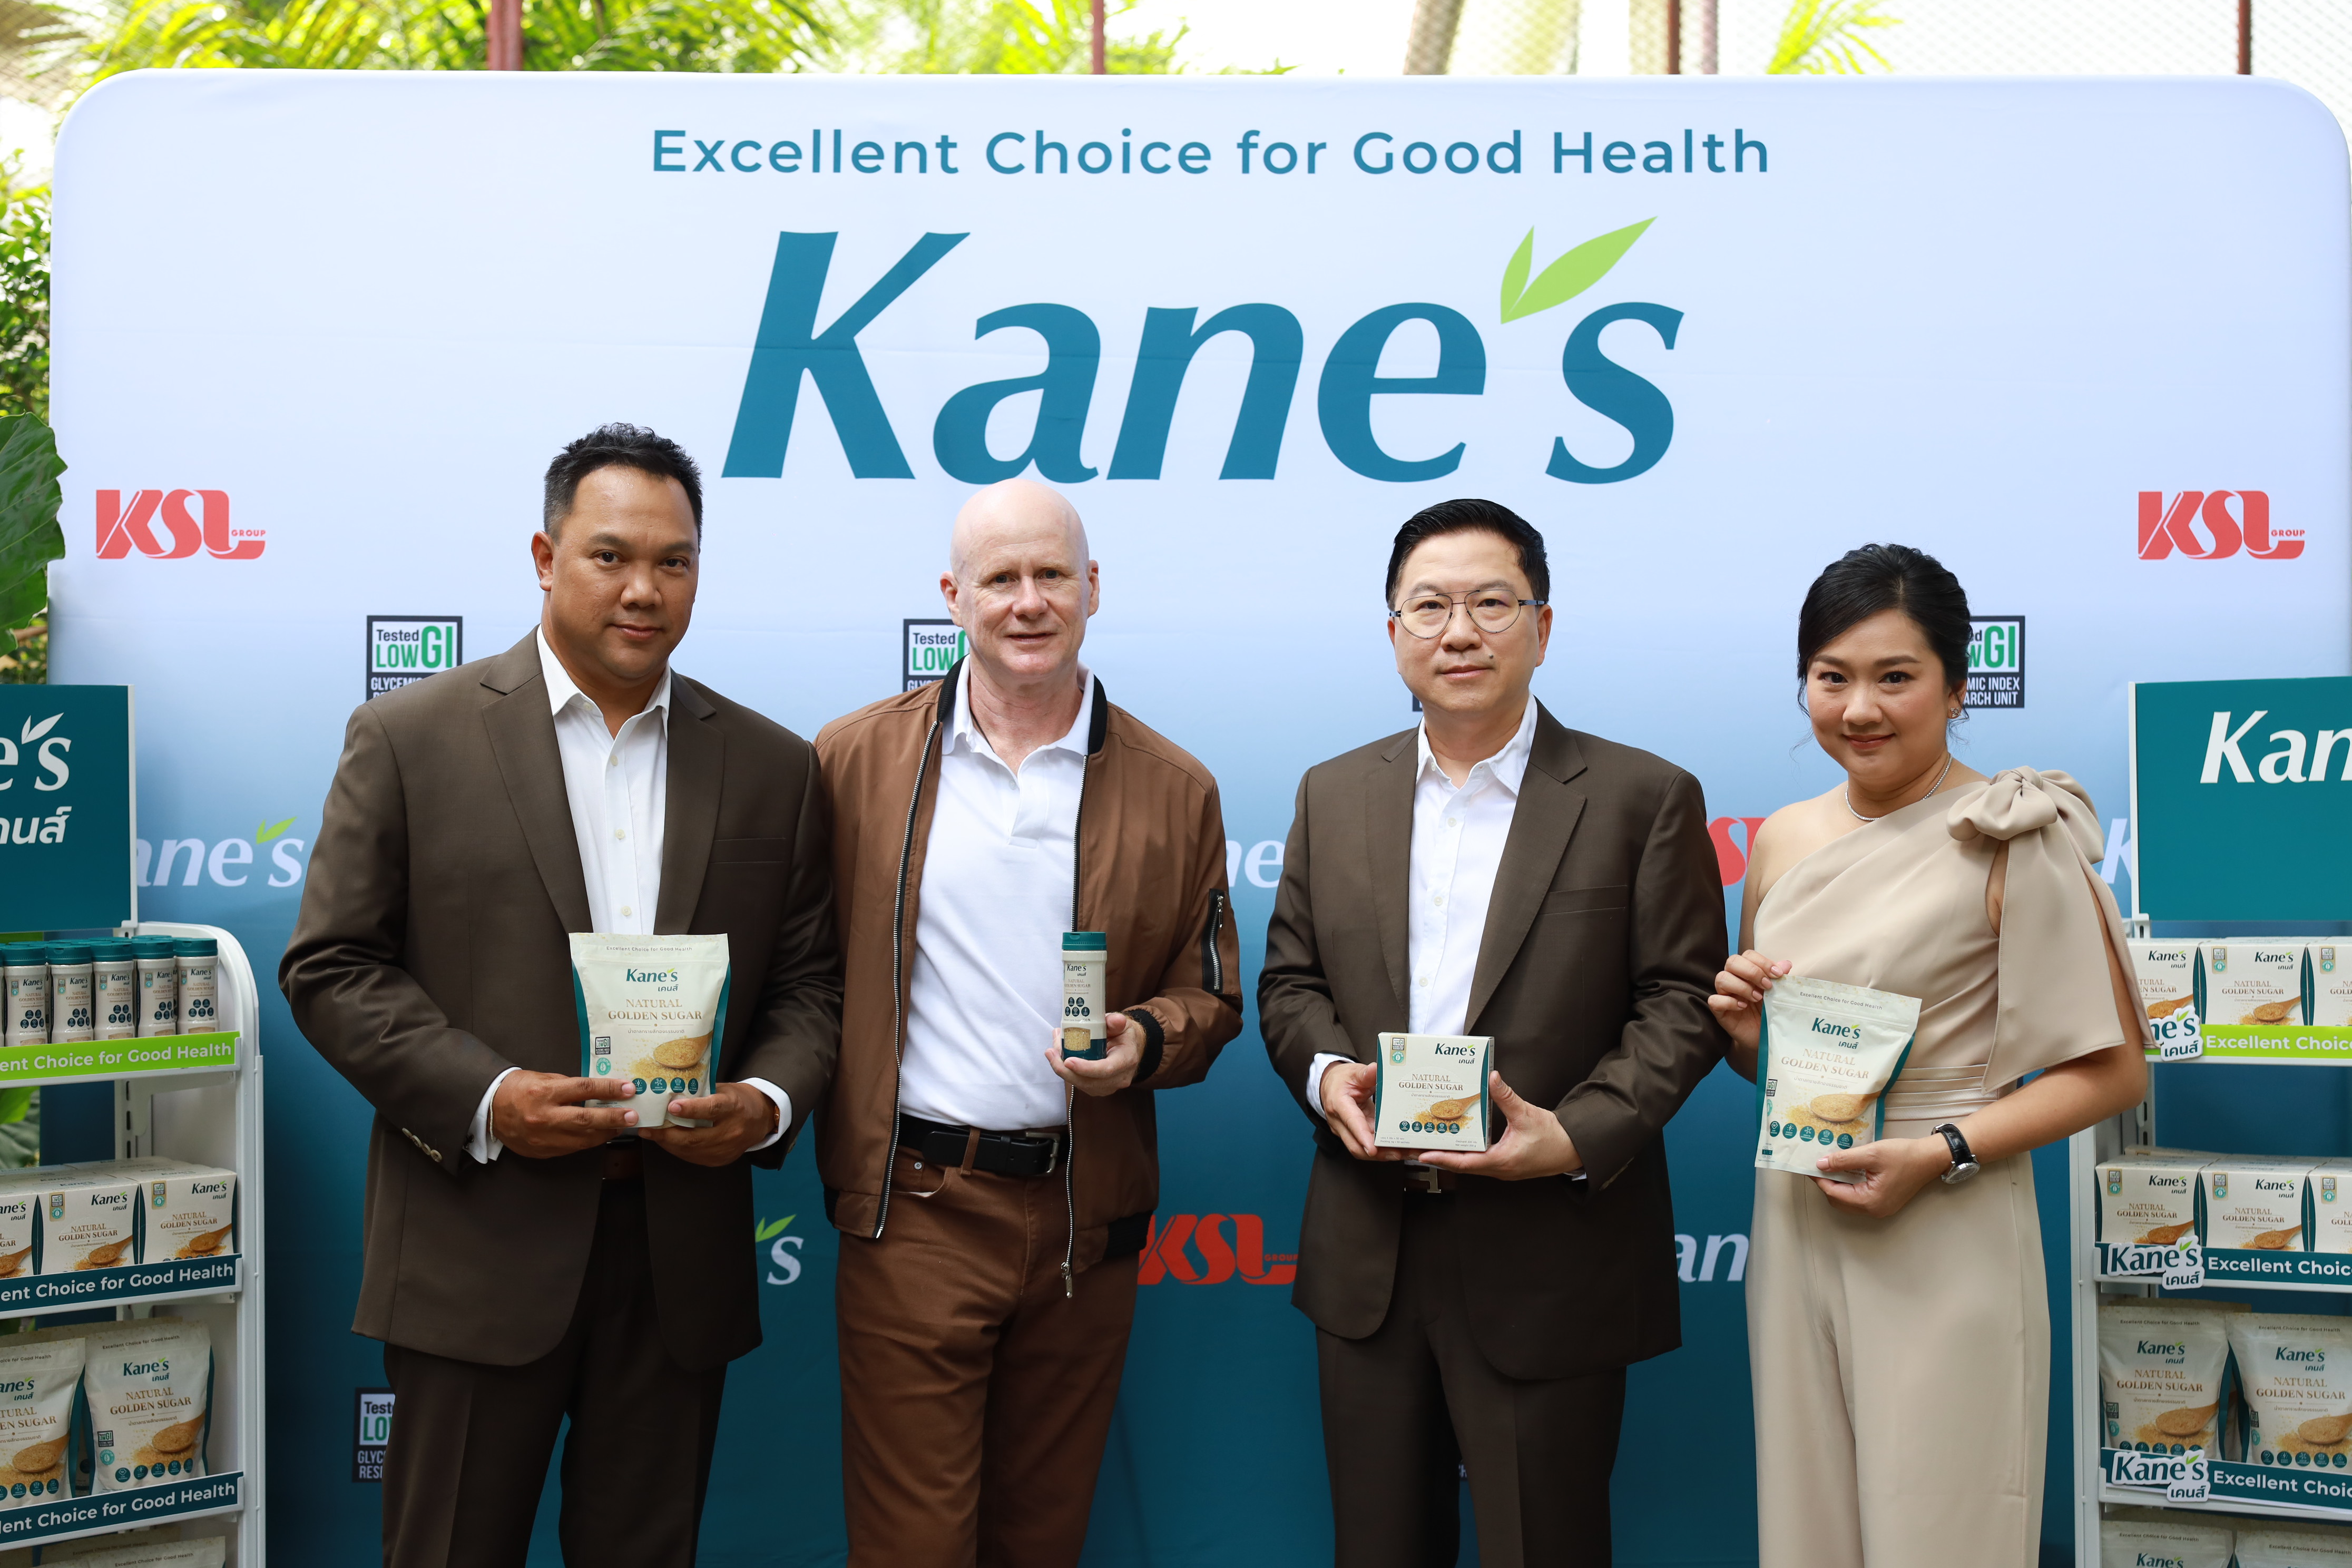 KSL แตกไลน์ธุรกิจ ส่ง Kane’s น้ำตาล Low GI รุกตลาดกลุ่มคนรักสุขภาพ